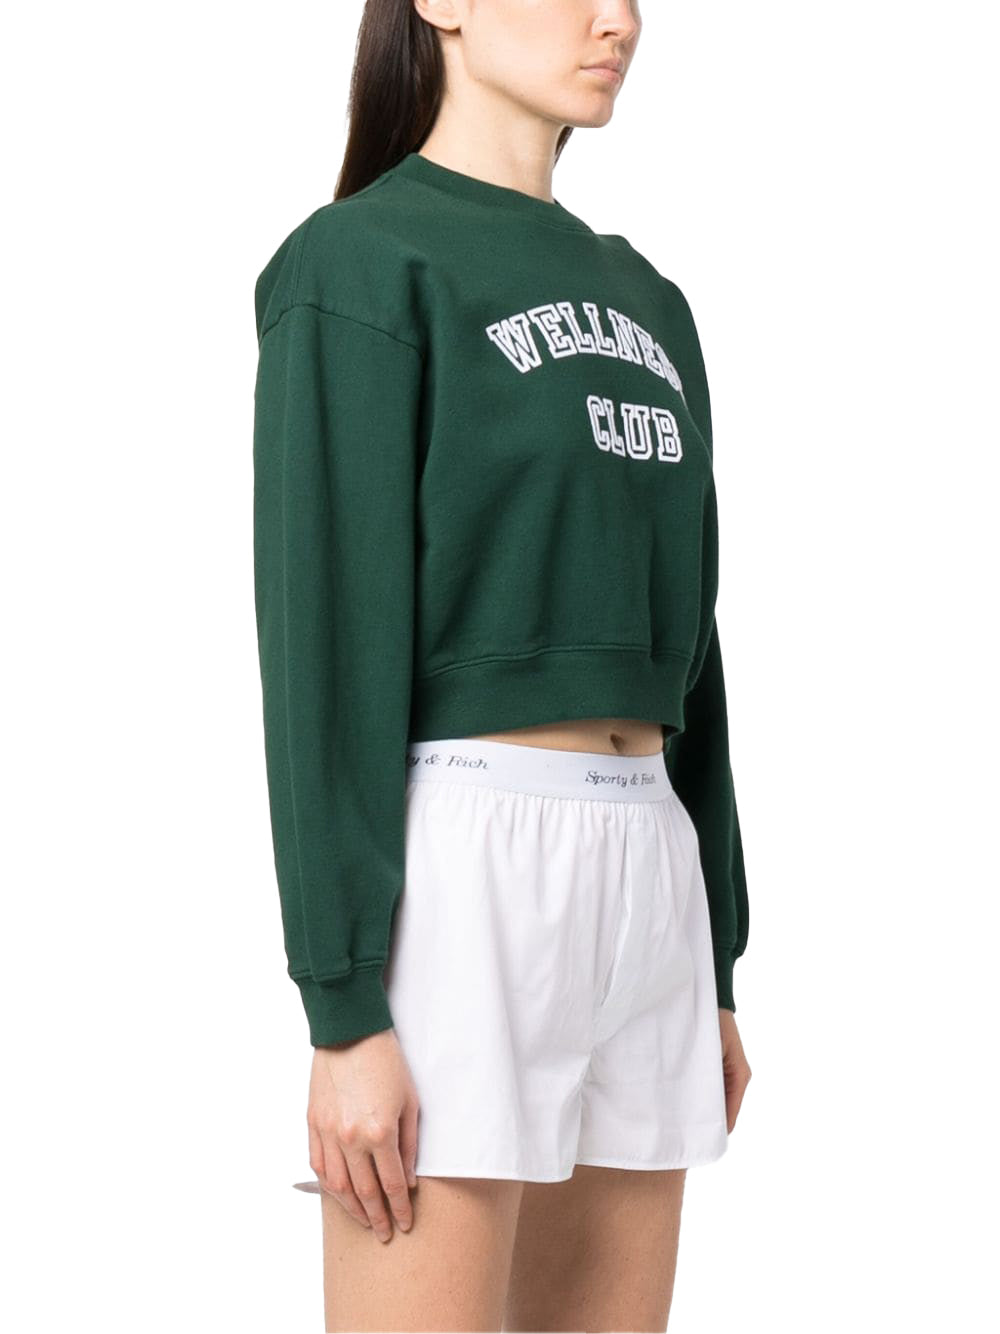 Wellness Club Green Sweatshirt